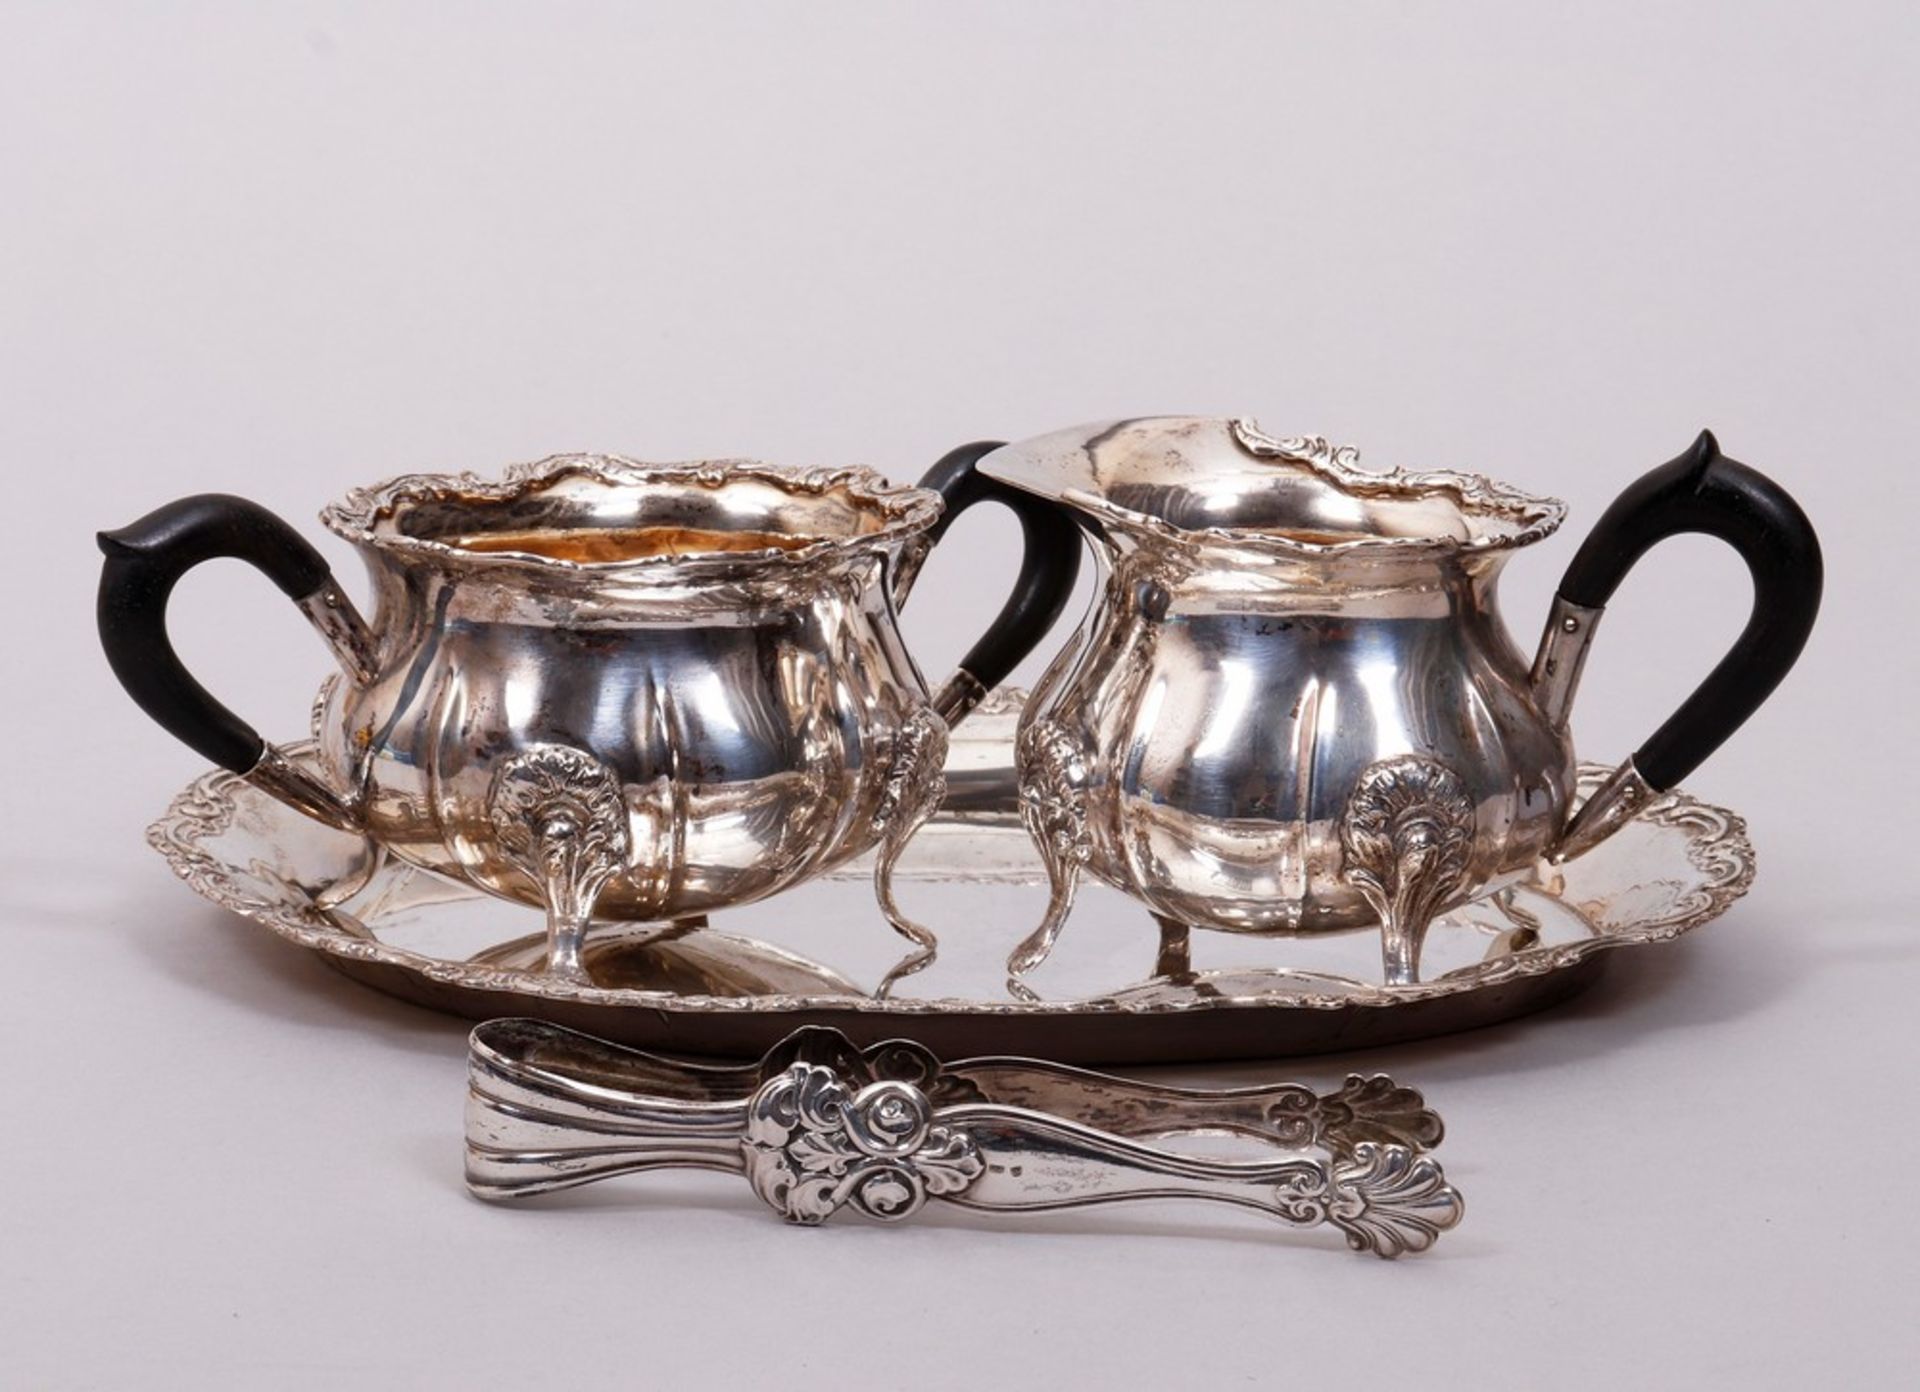 Cream jug and sugar bowl on tray, 800/830 silver, German, ca. 1900/20